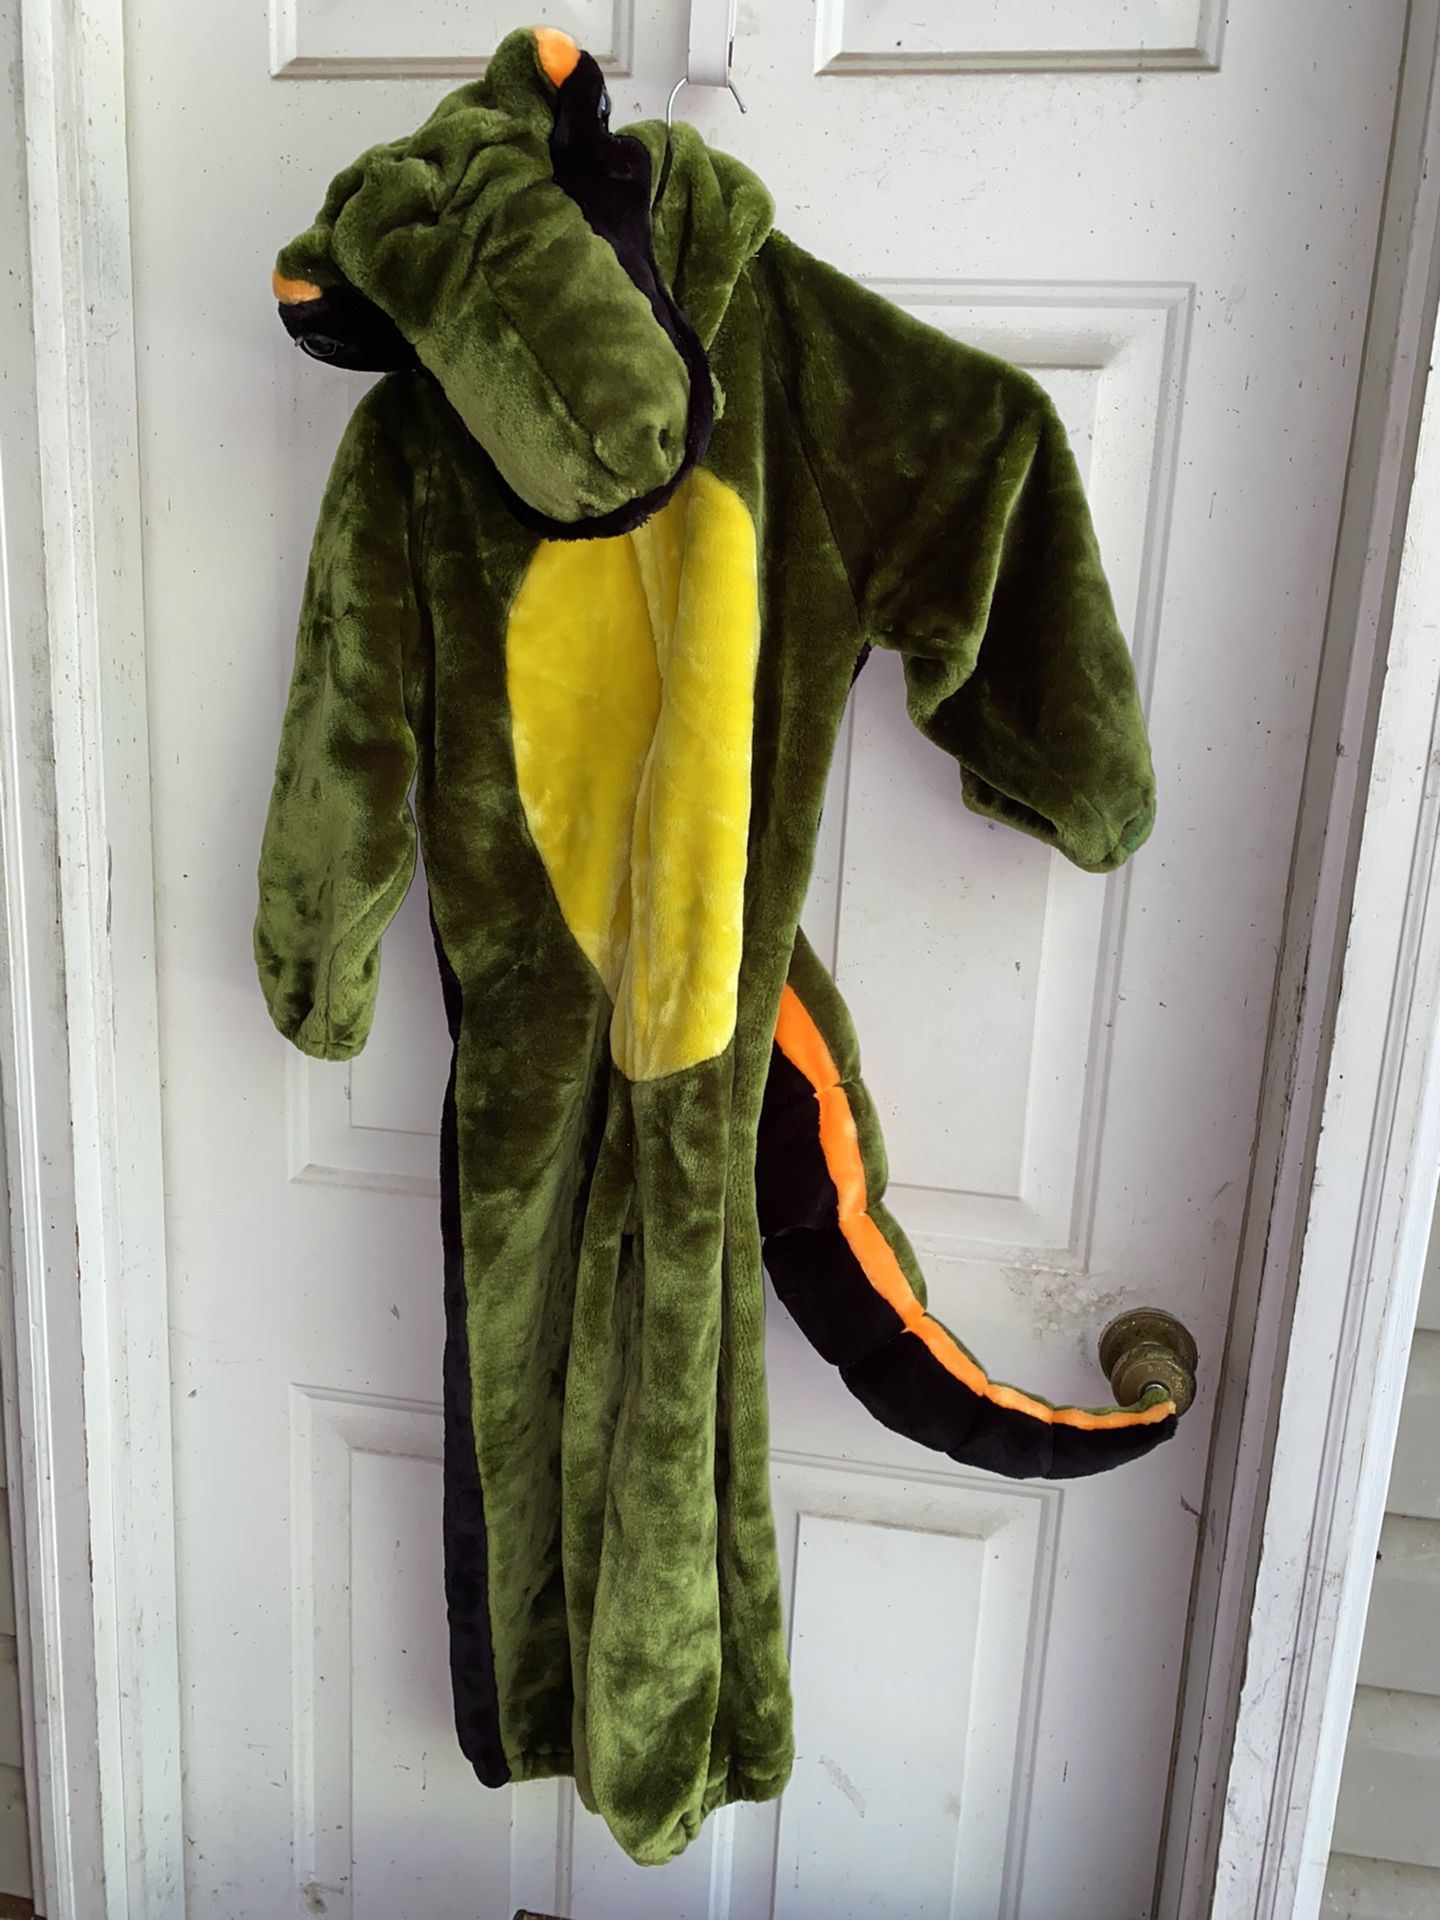 Chosun Kids Alligator/Reptile Halloween Costume (XL: size 7-8)